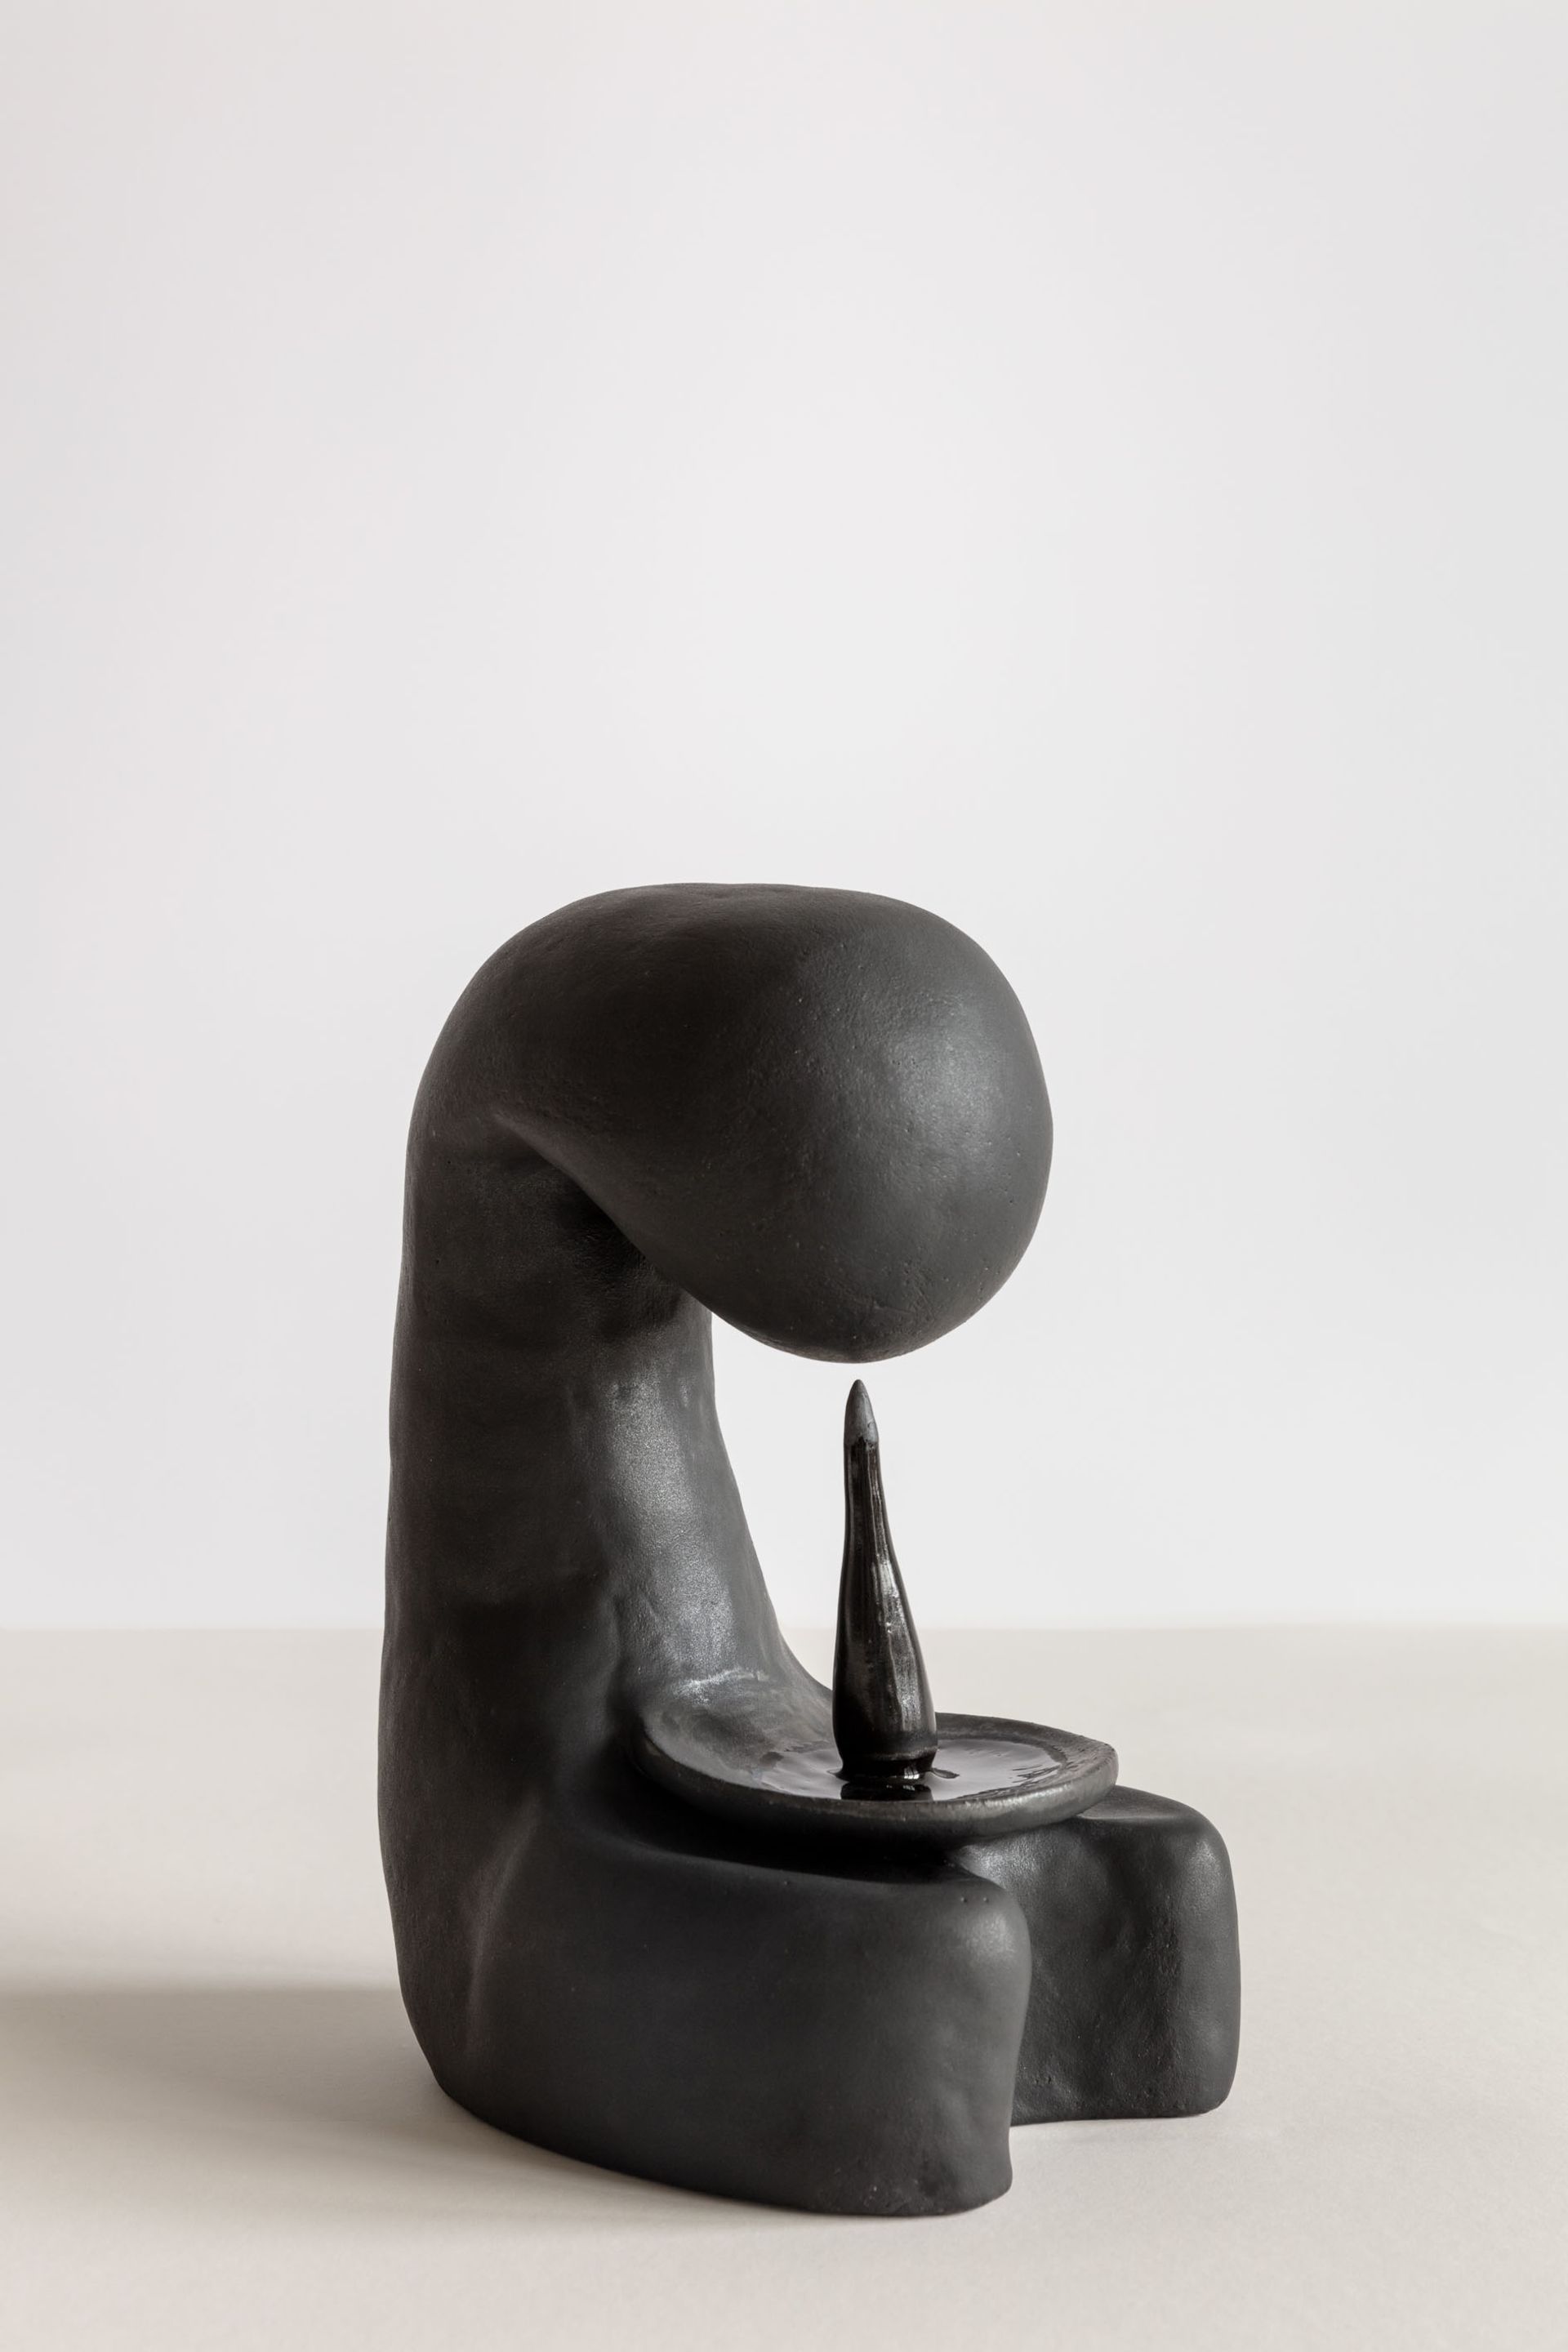 Veronika Hilger, Untitled, 2022, ceramic, glazed, 28 × 24.5 x 19 cm